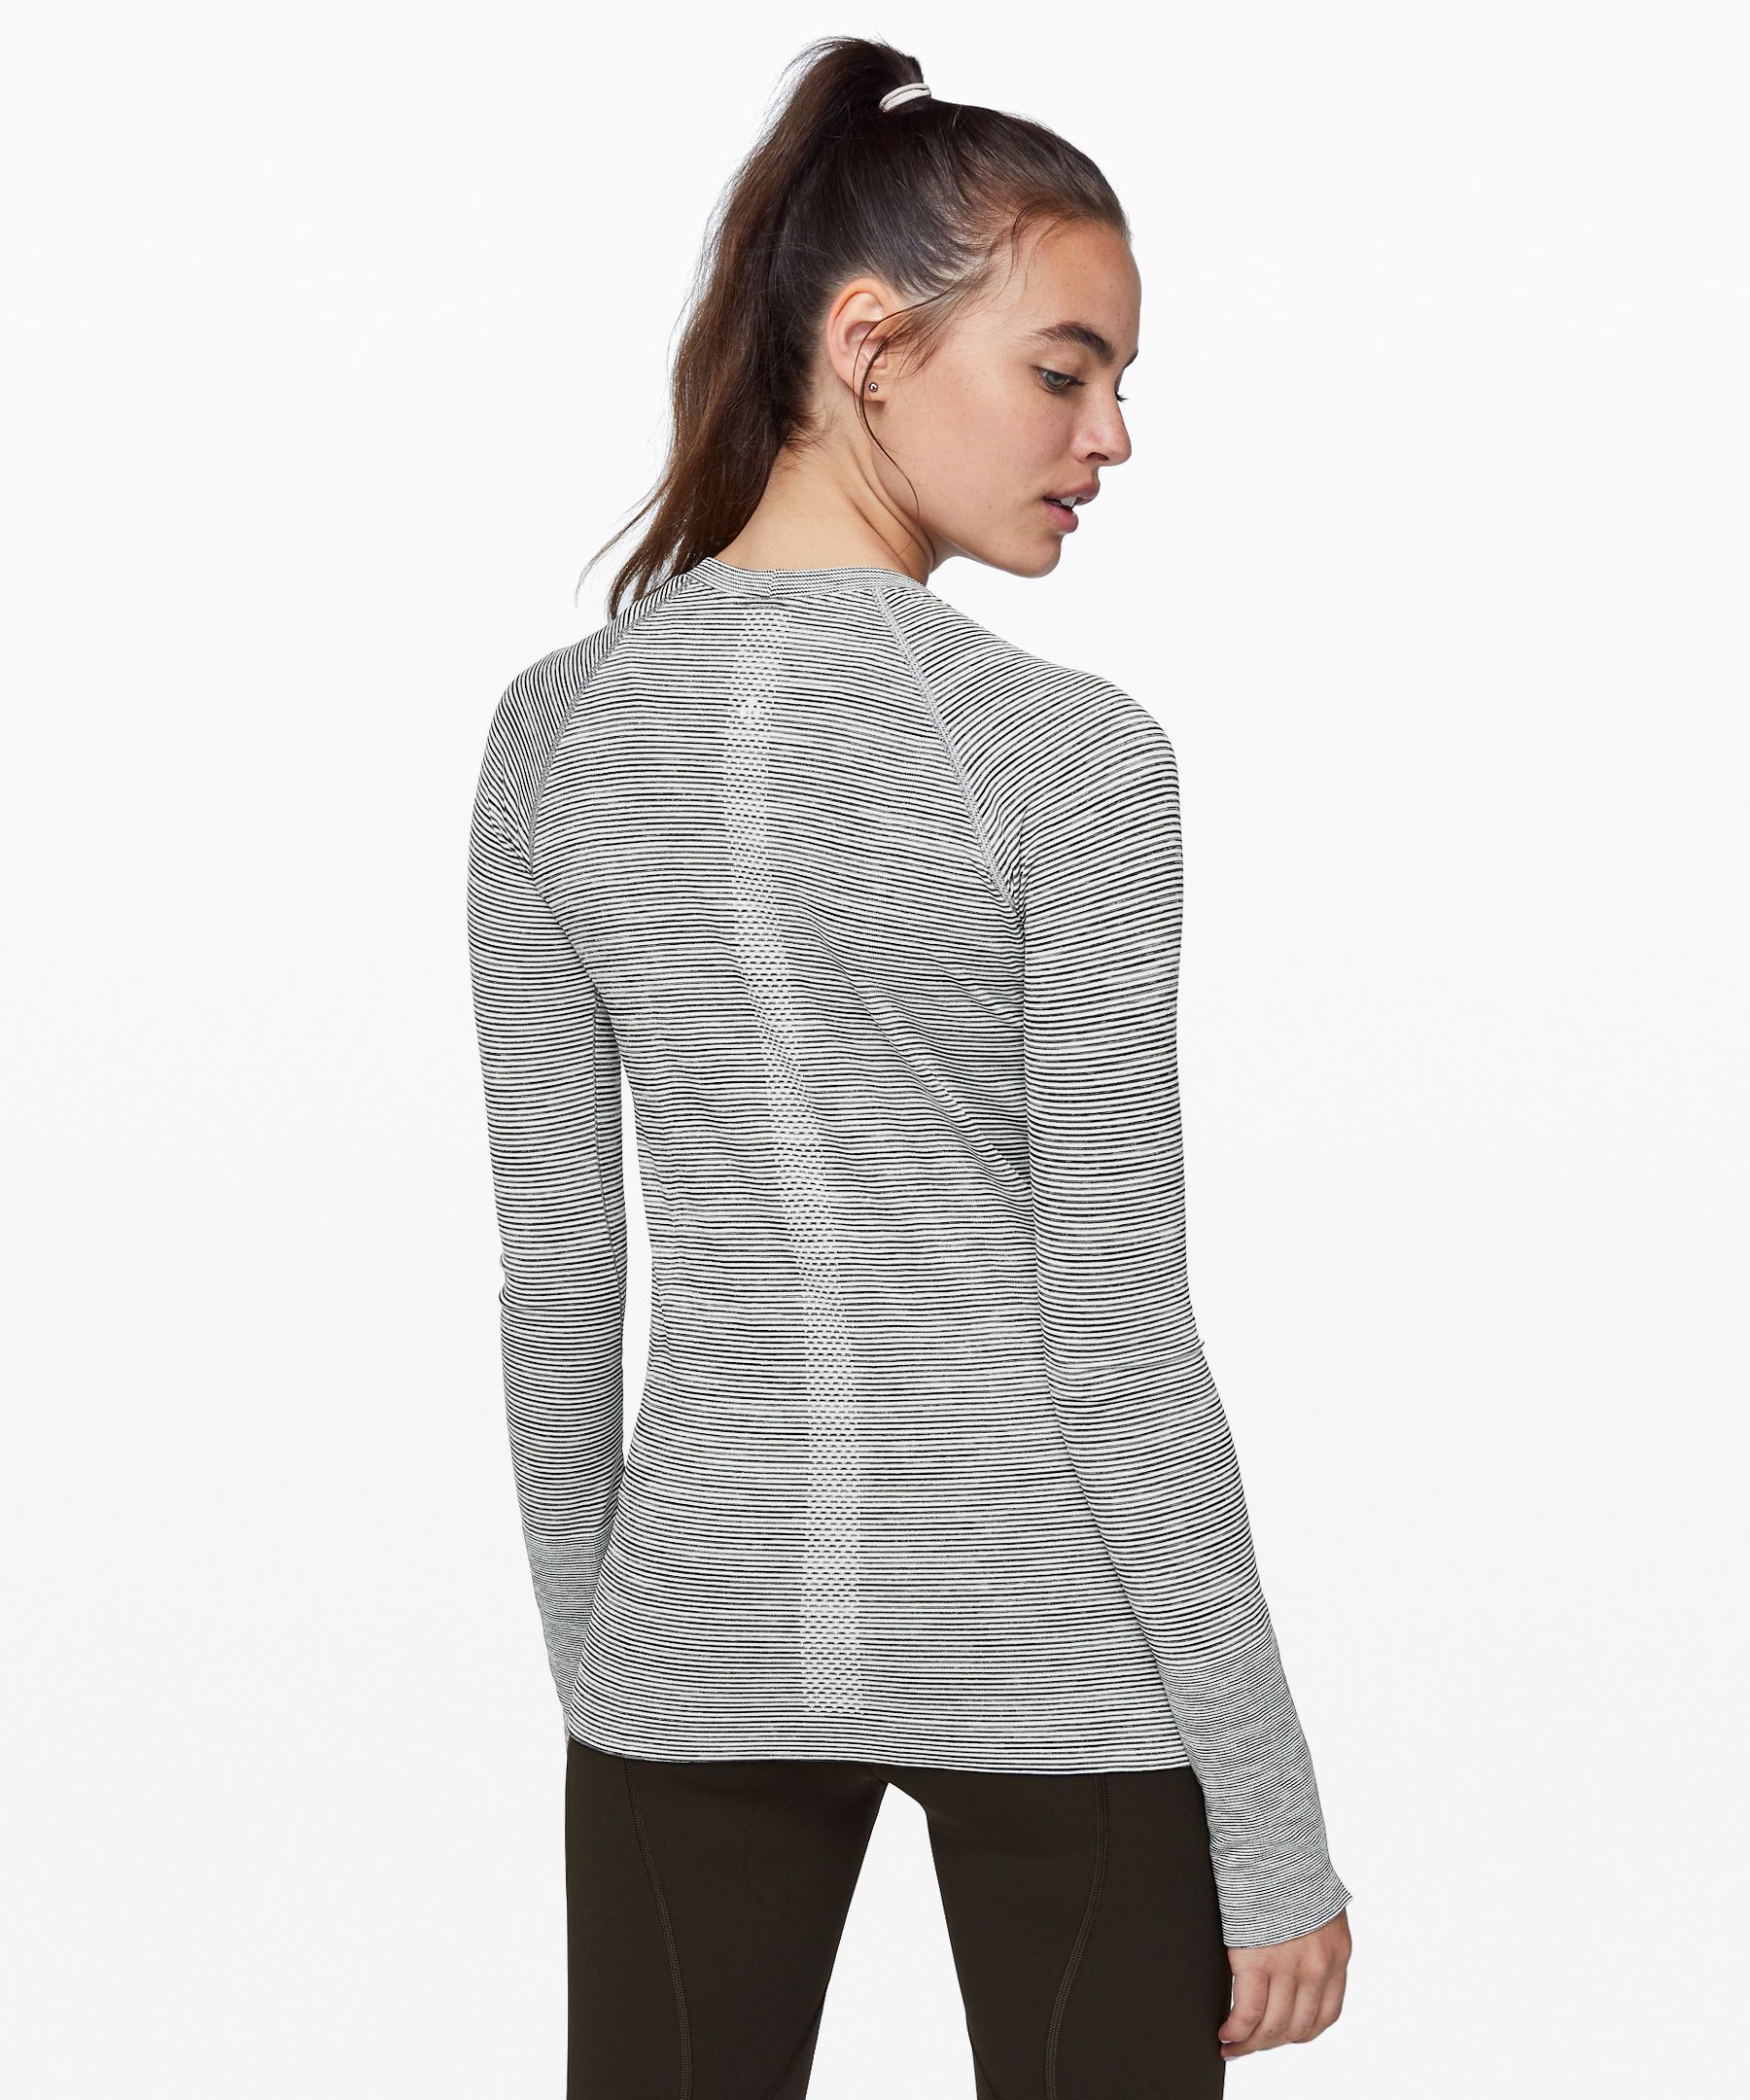 Swiftly Tech Long Sleeve Shirt 2.0 *Online Only | Women's Long 